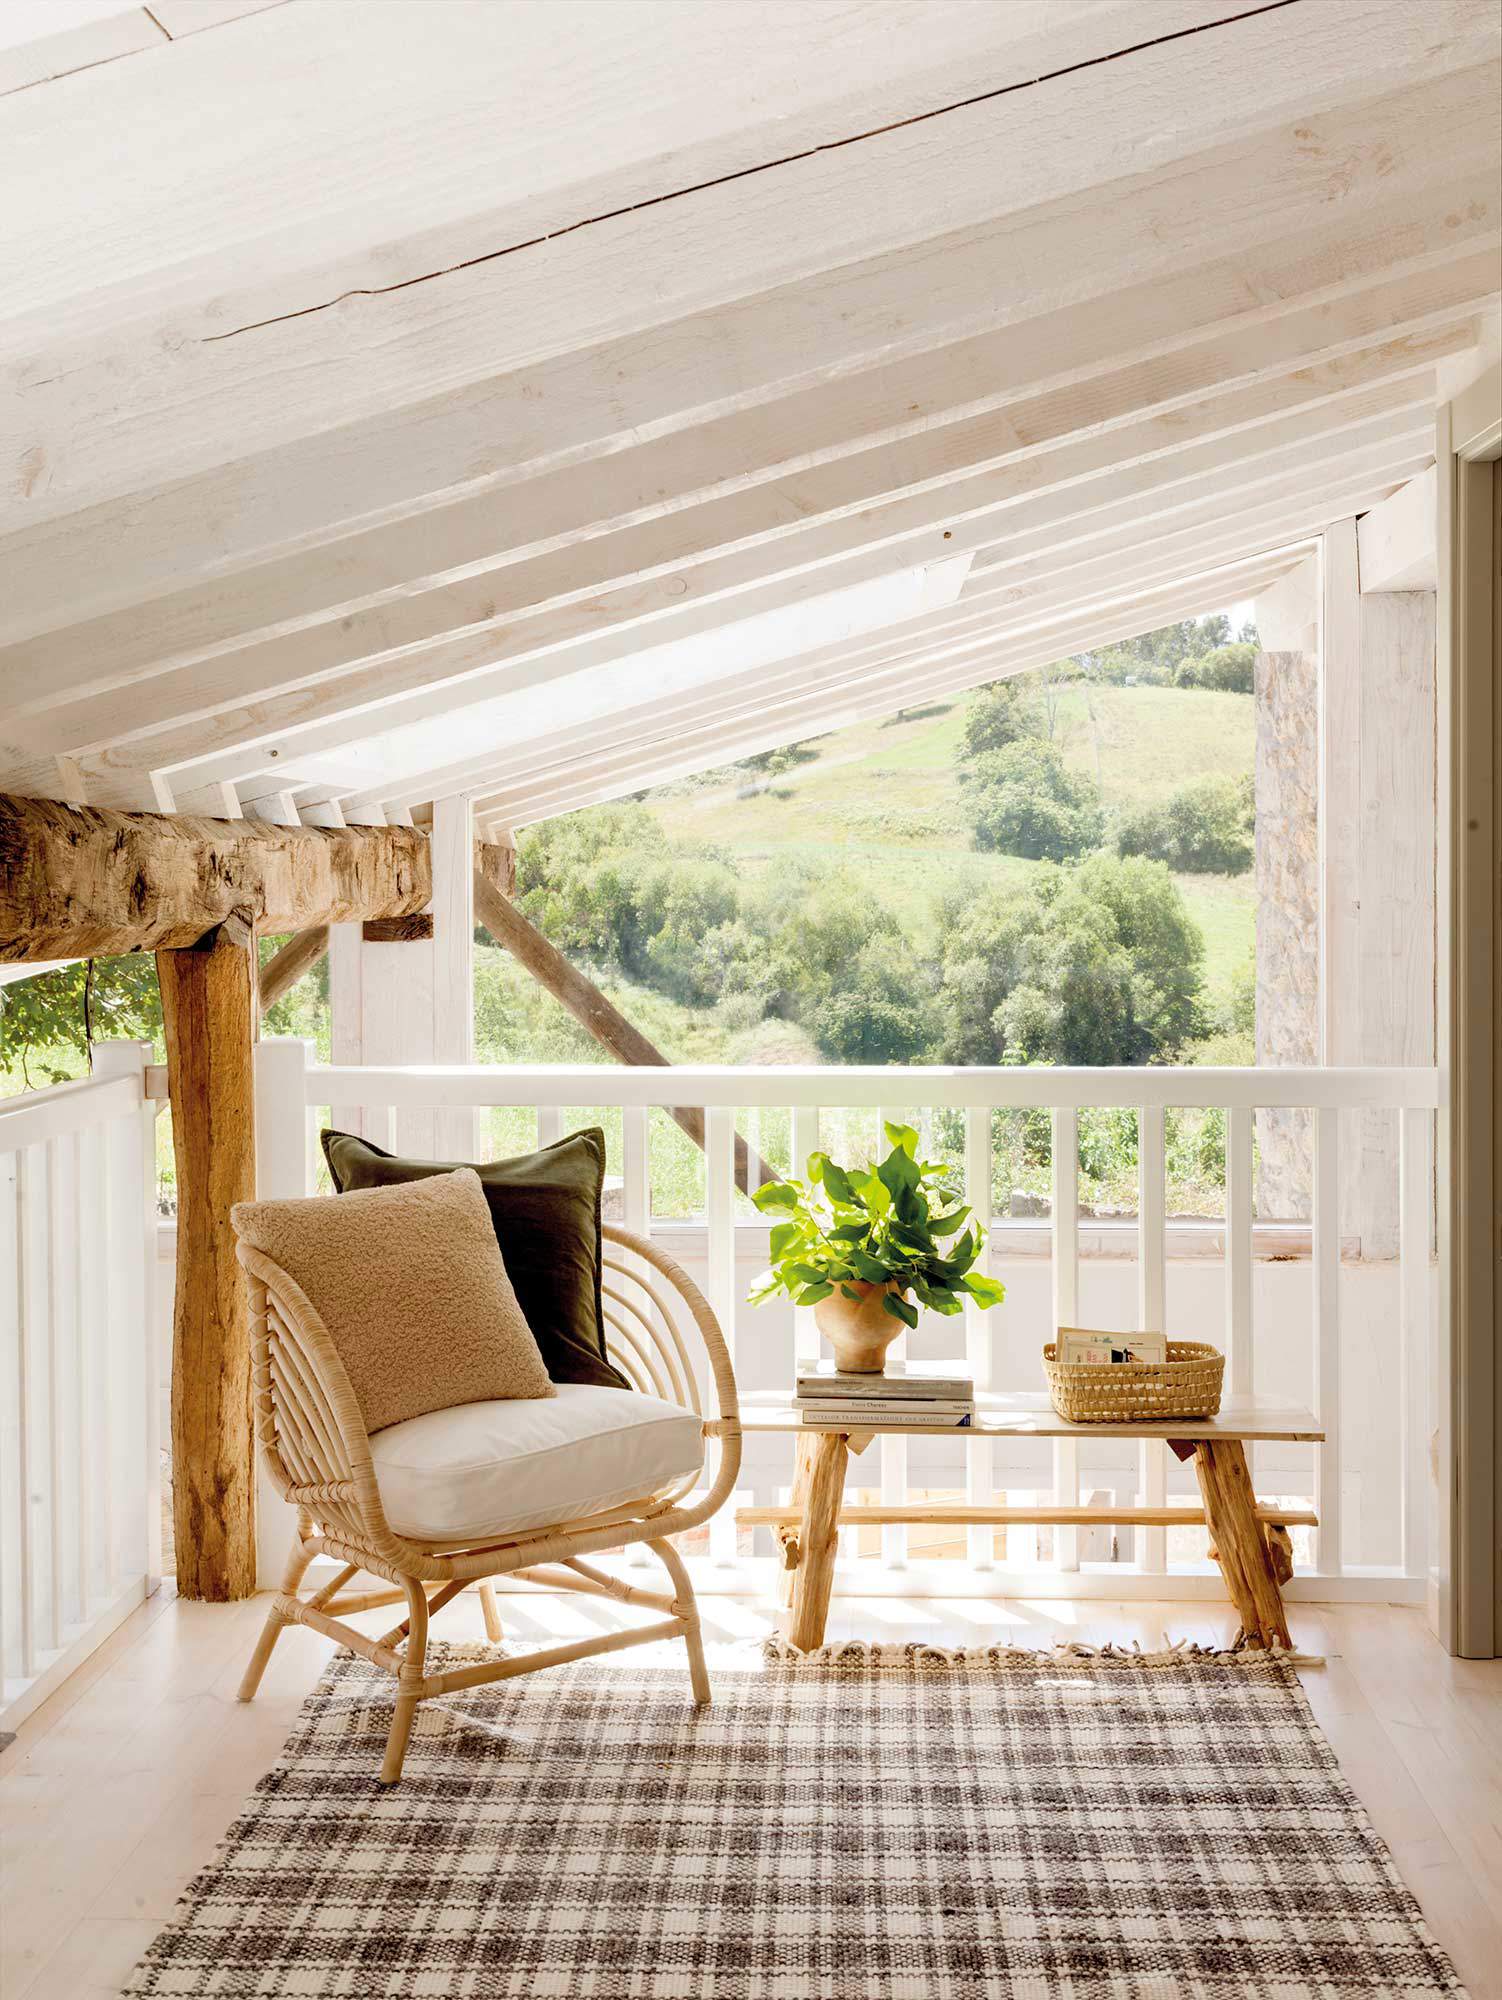 Terraza con sillón de fibra natural y alfombra de cuadros.